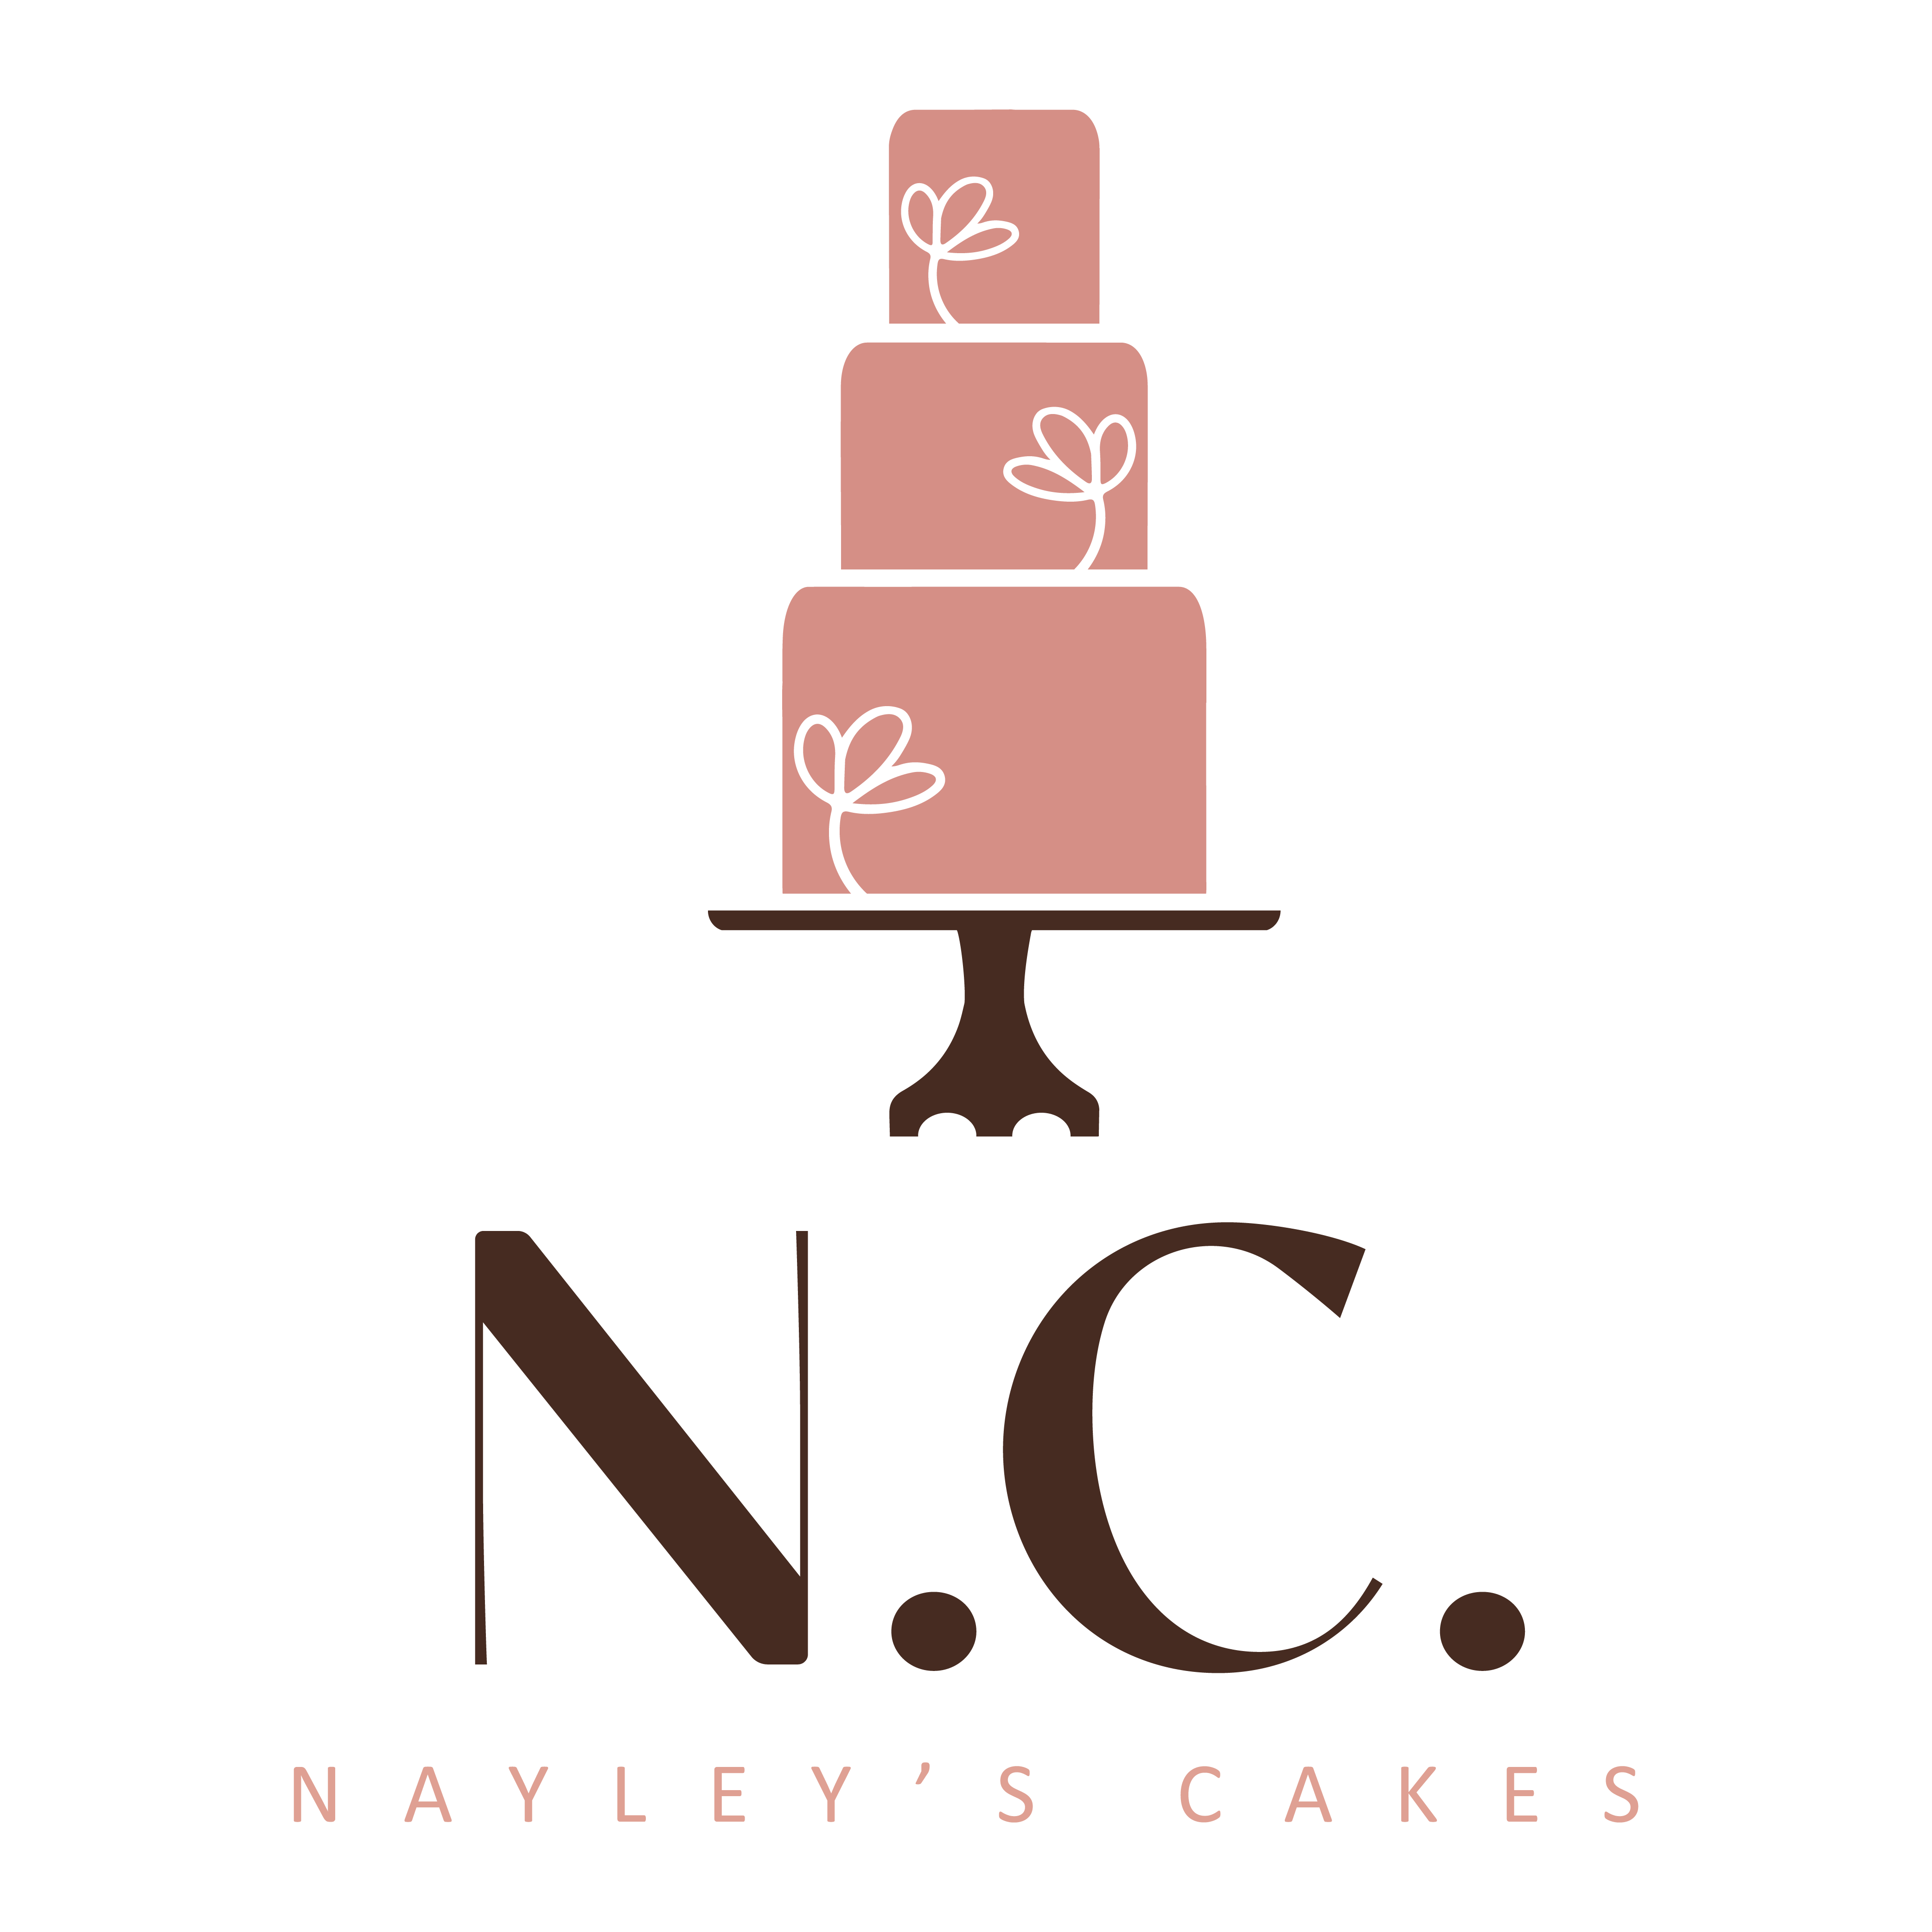 Nayleys Cakes